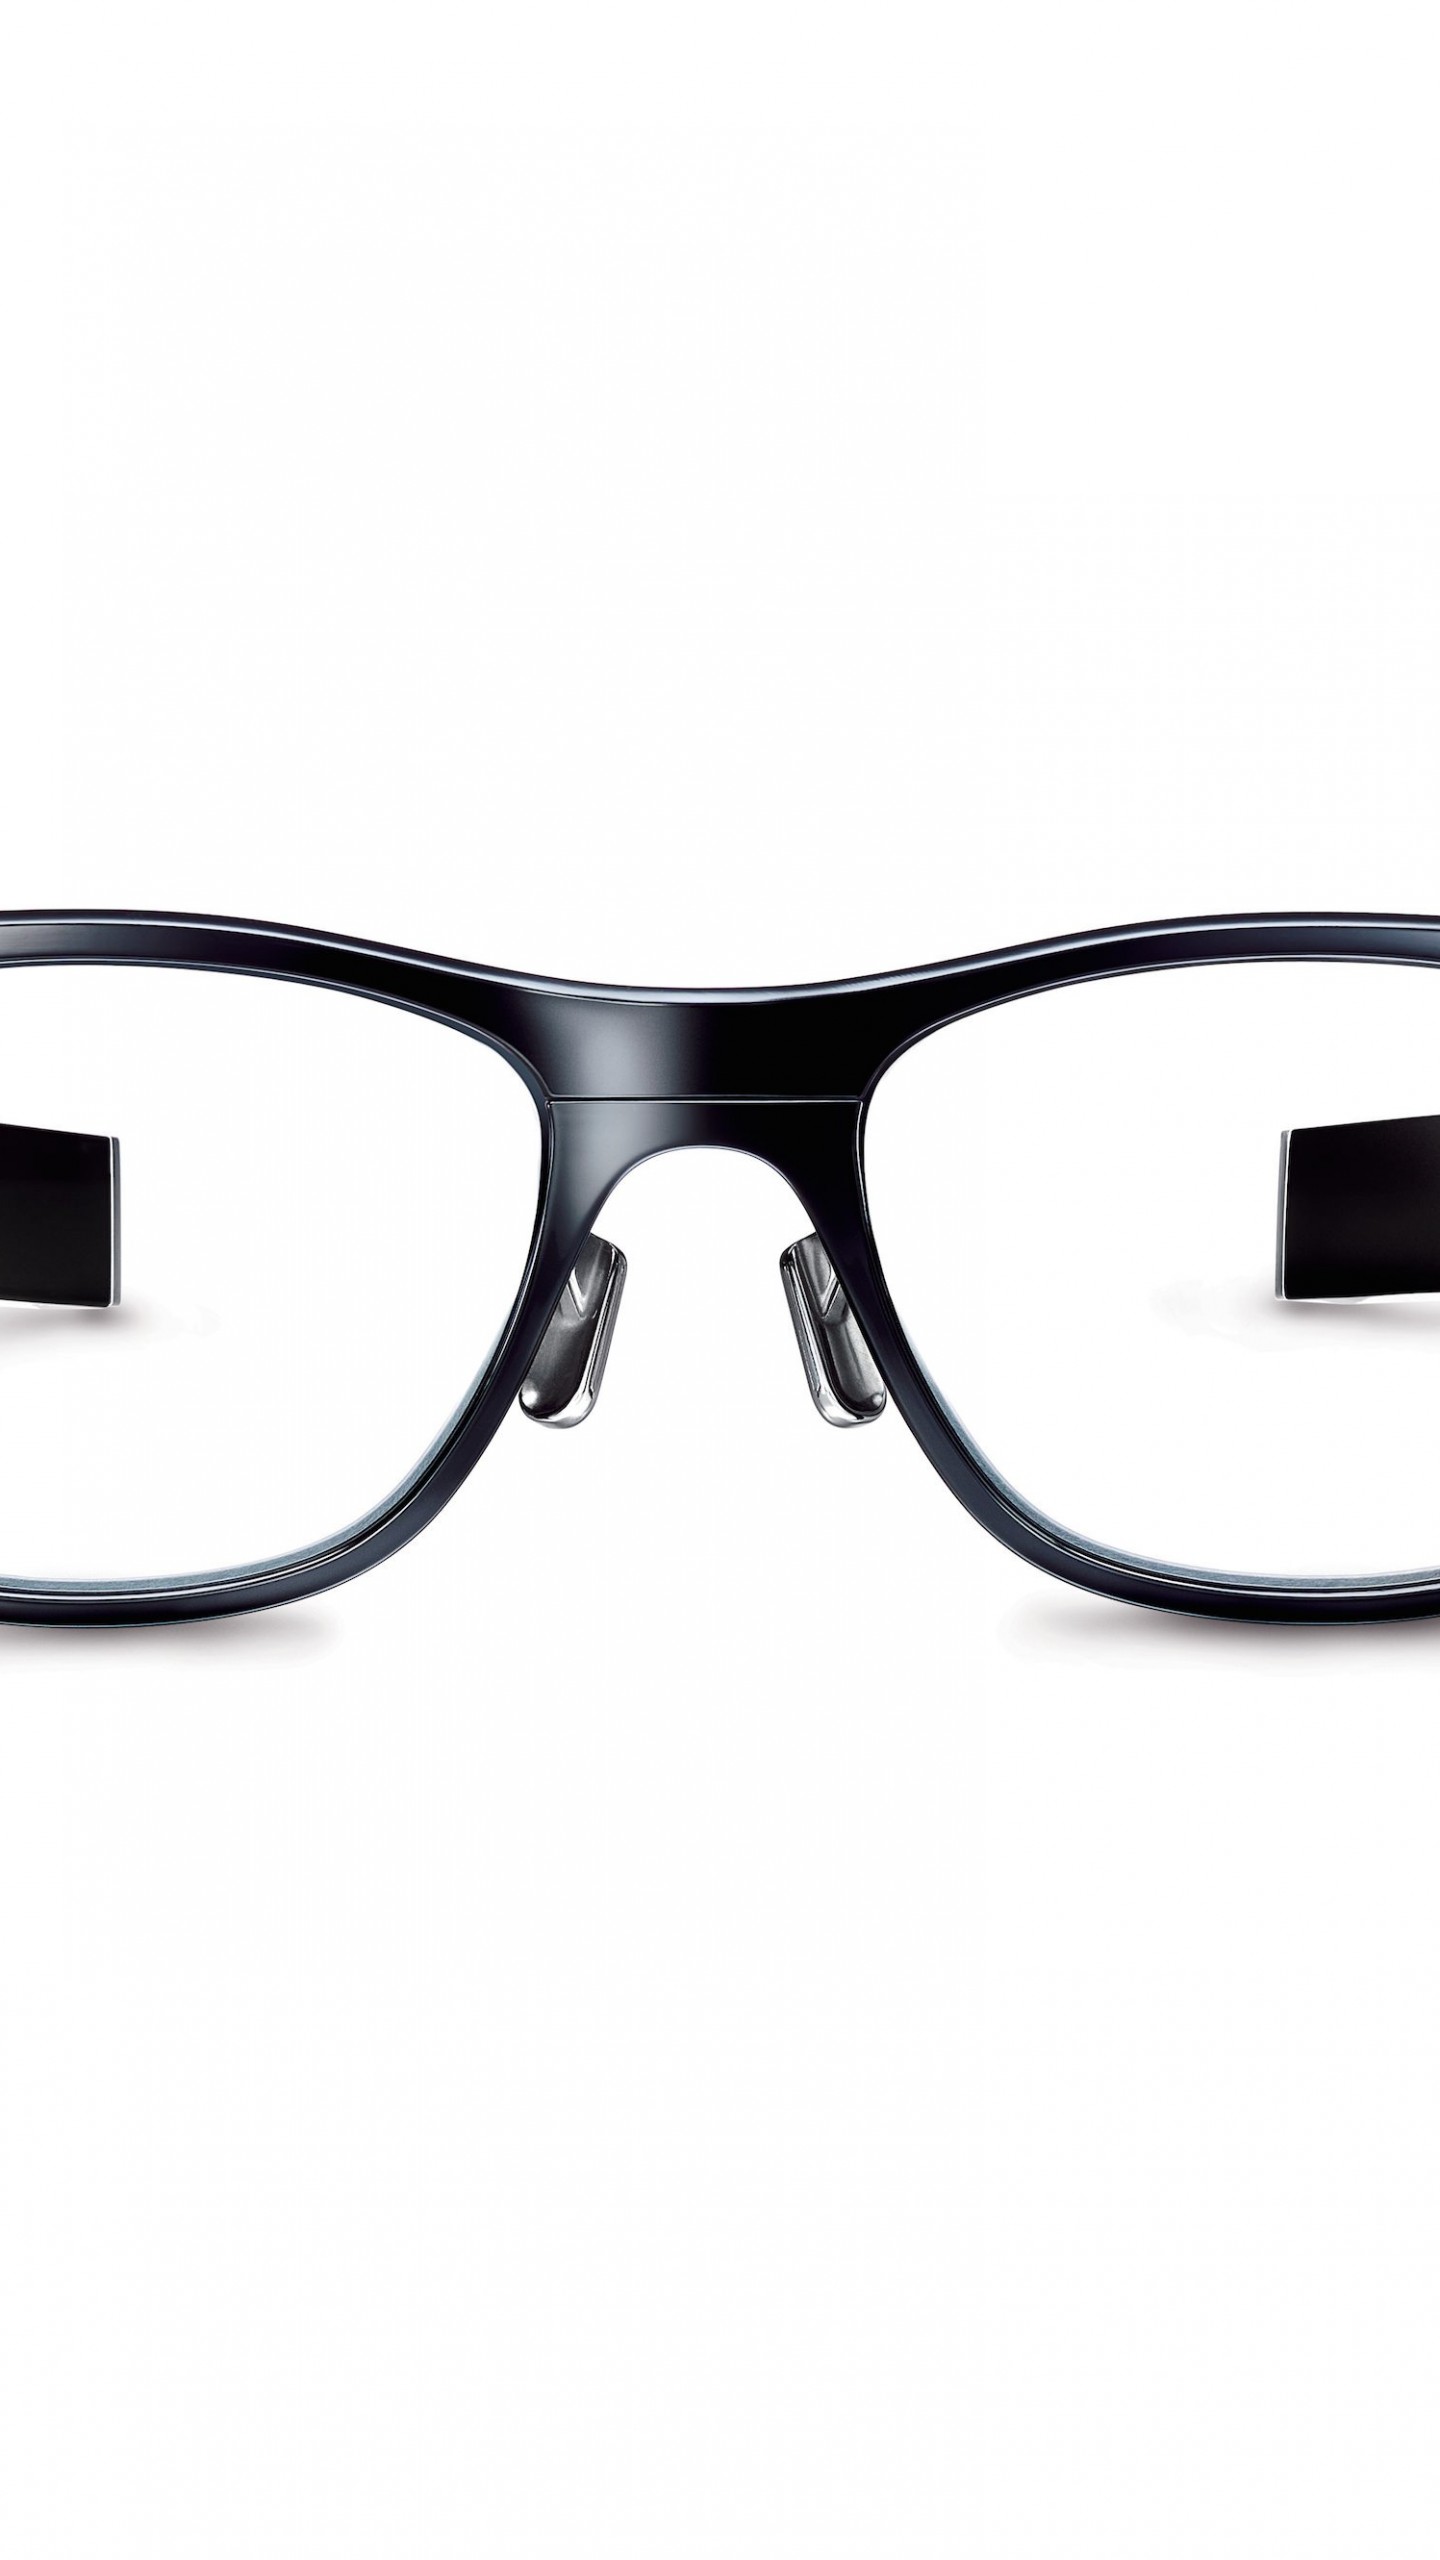 Jins Meme Smart Glasses Wallpaper for LG G3